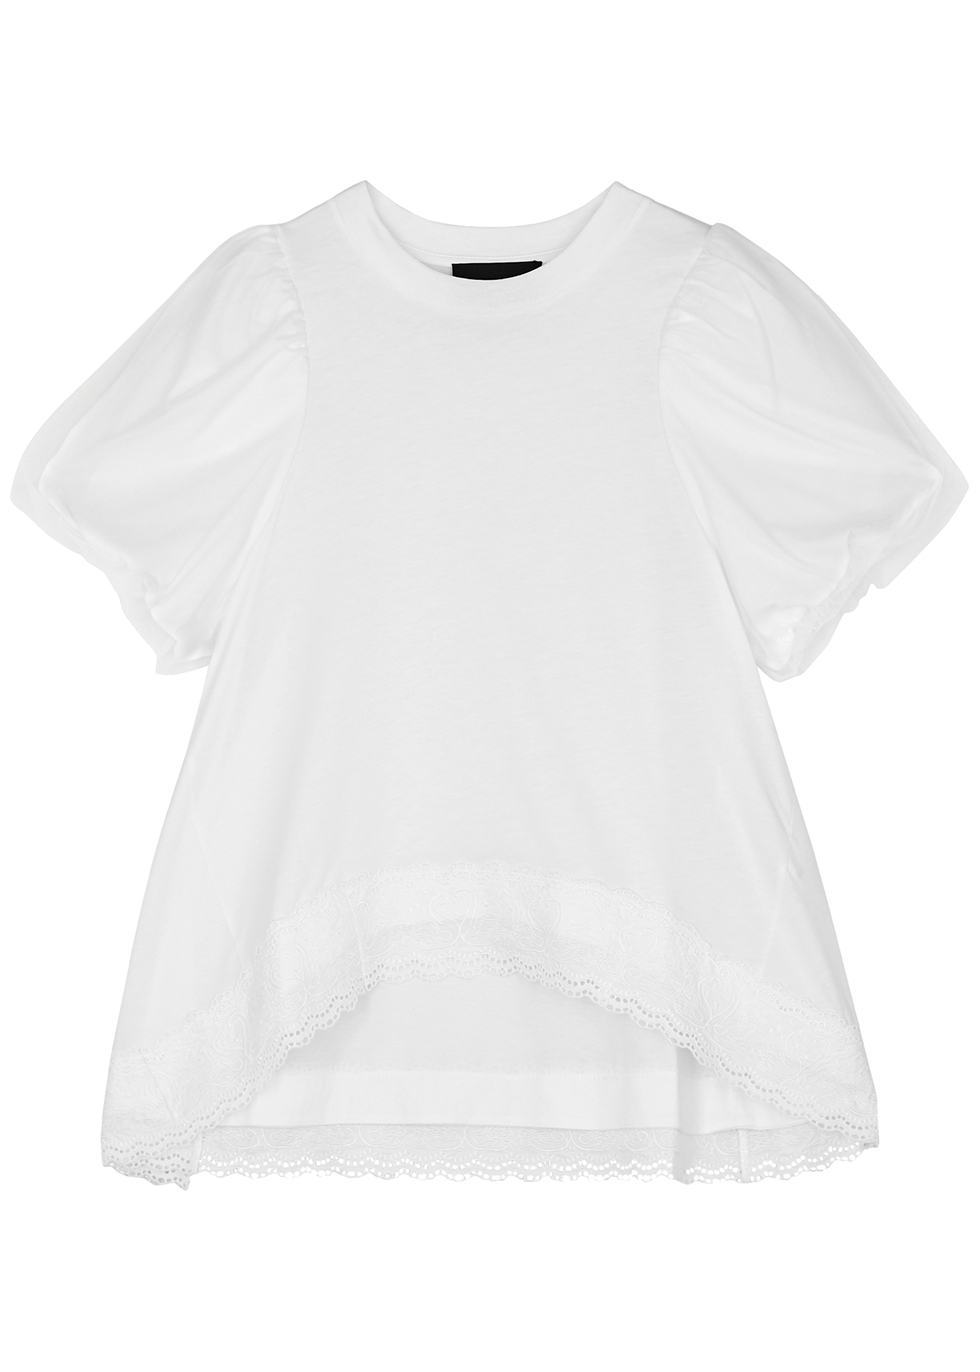 SIMONE ROCHA White embroidered cotton T-shirt